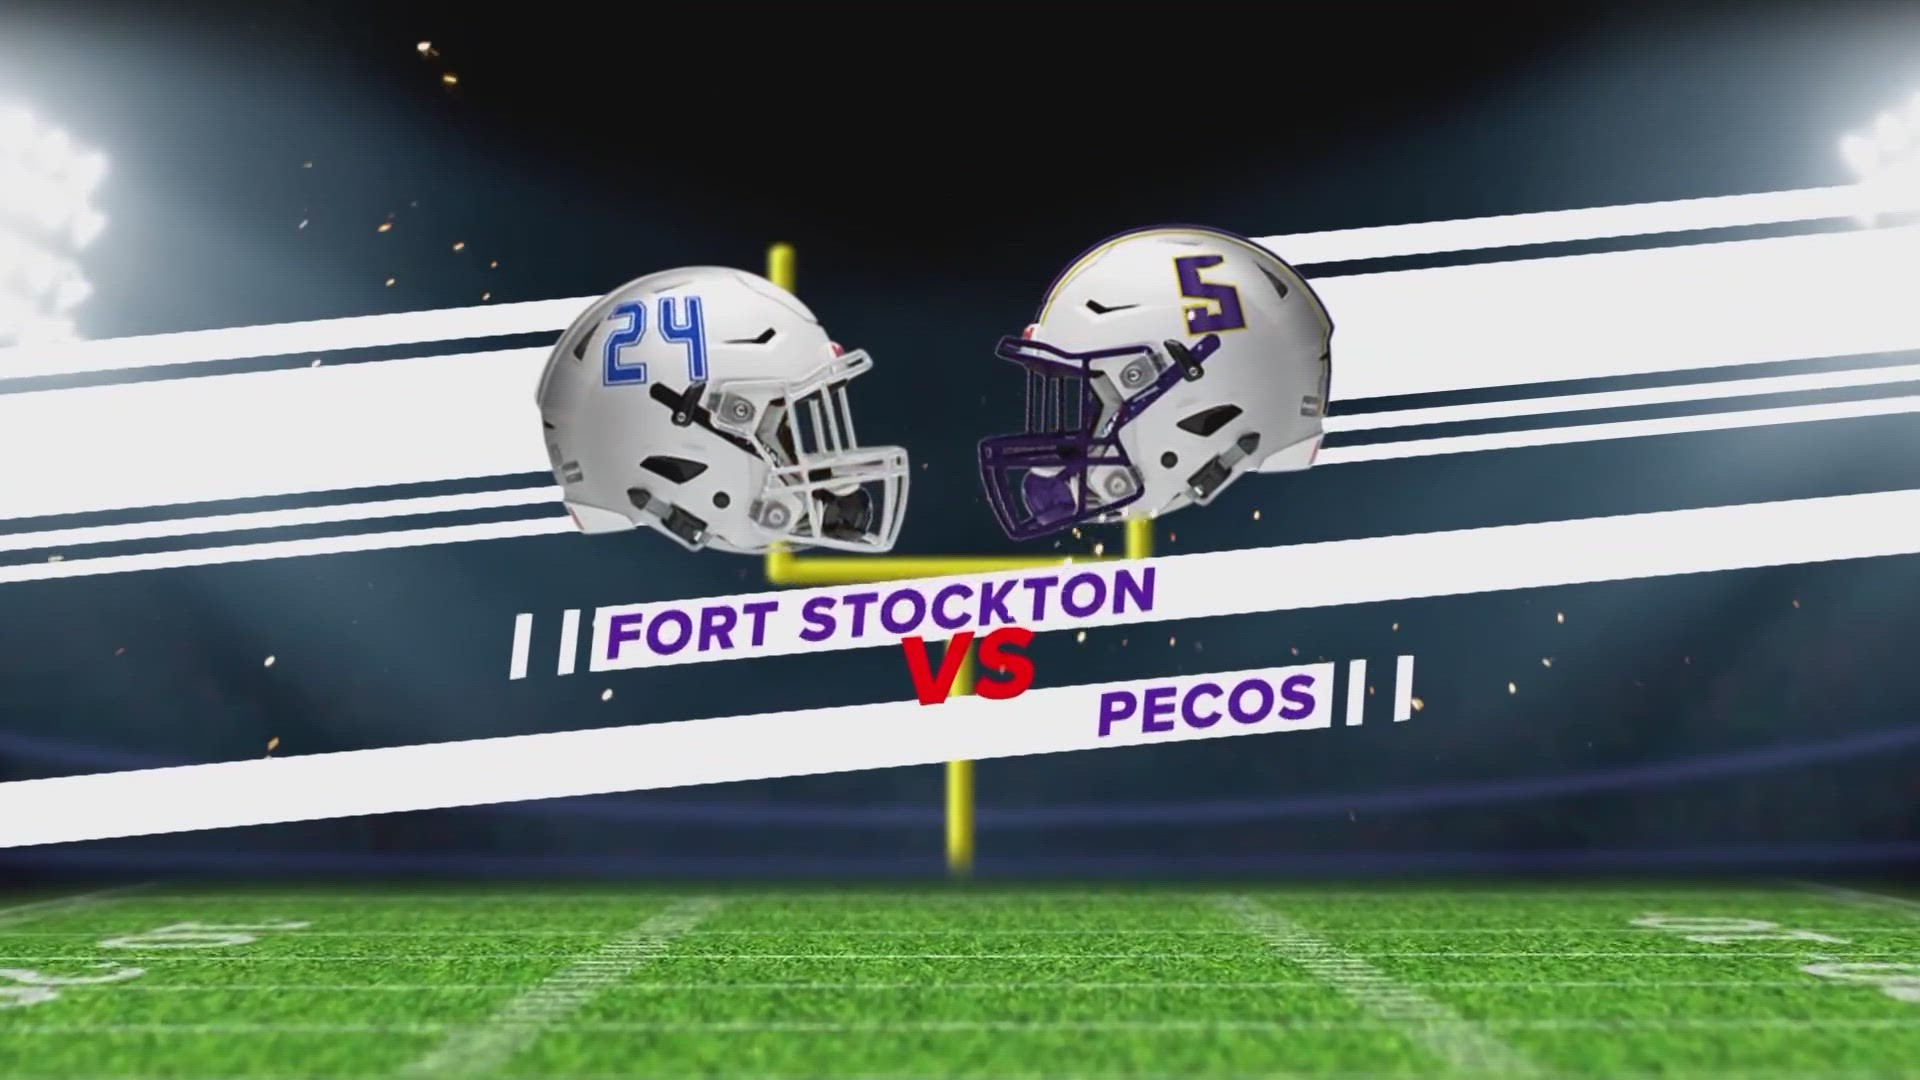 Week 10: Fort Stockton vs. Pecos